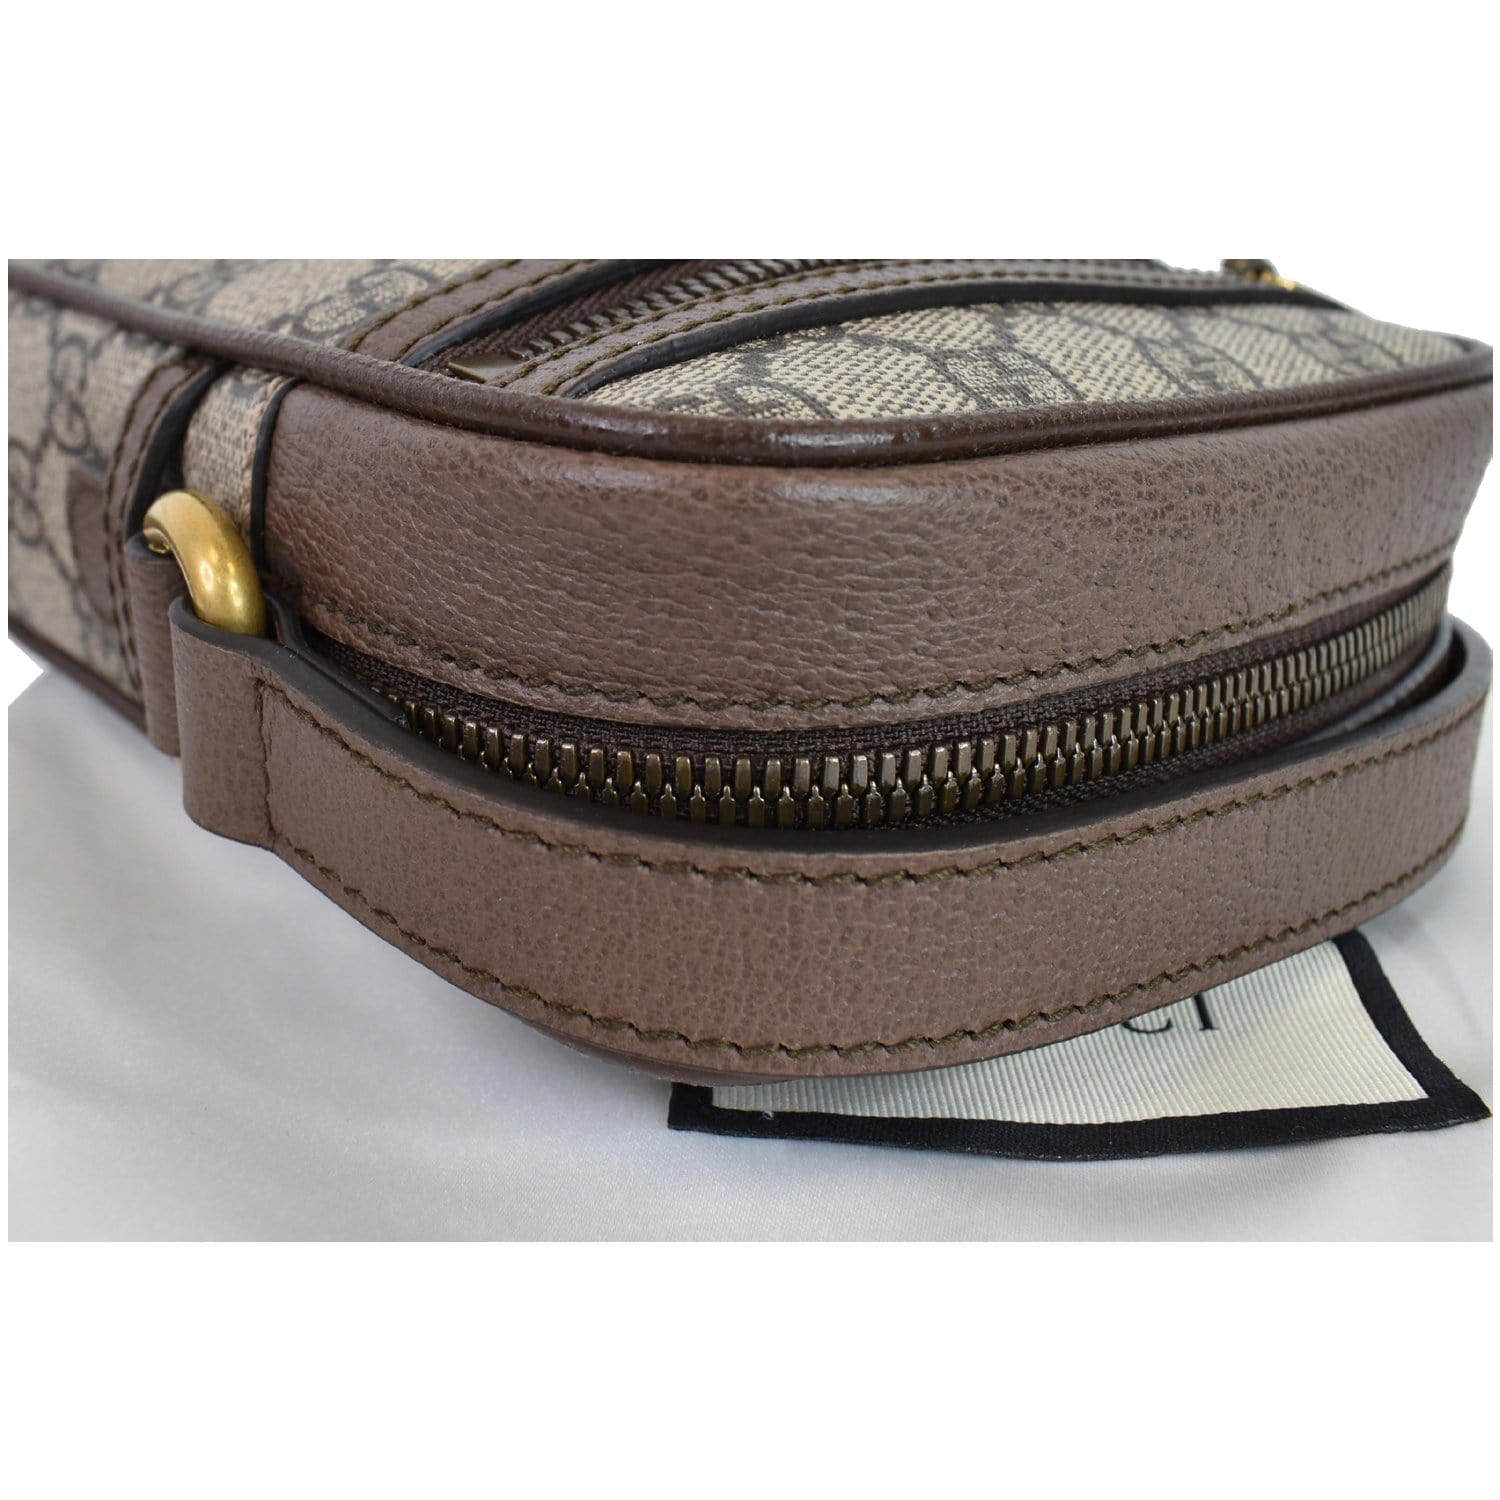 (WMNS) Gucci Ophidia GG Canvas Shoulder Bag Beige 601044-96IWB-8745 US F